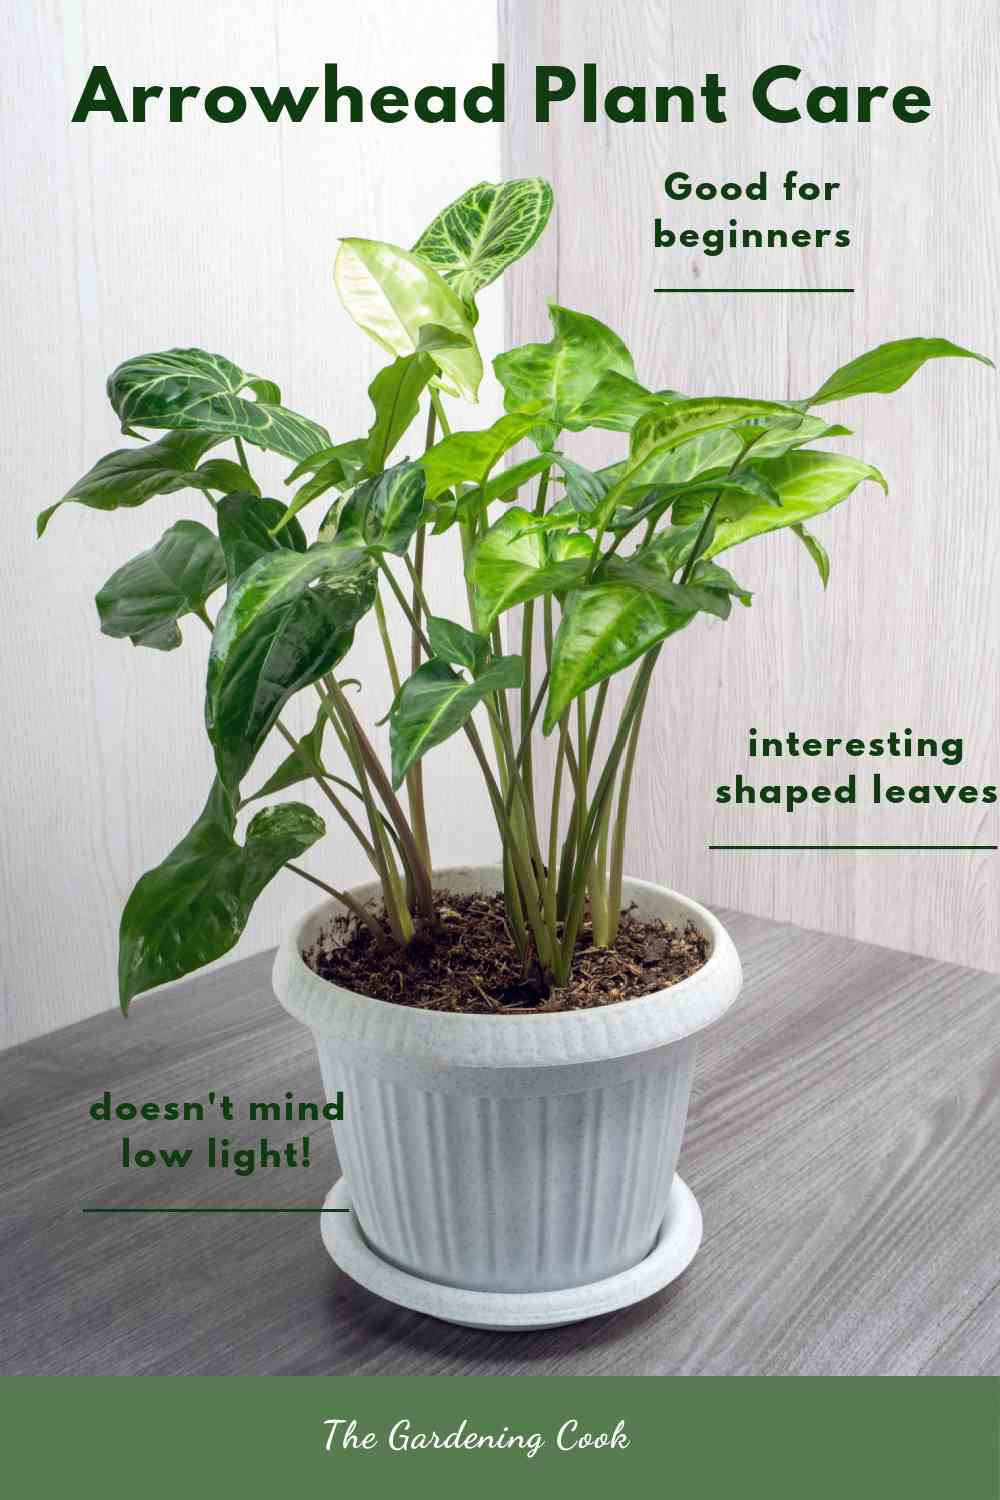 Arrowhead Plant Care - Tips For Growing Syngonium Podophyllum